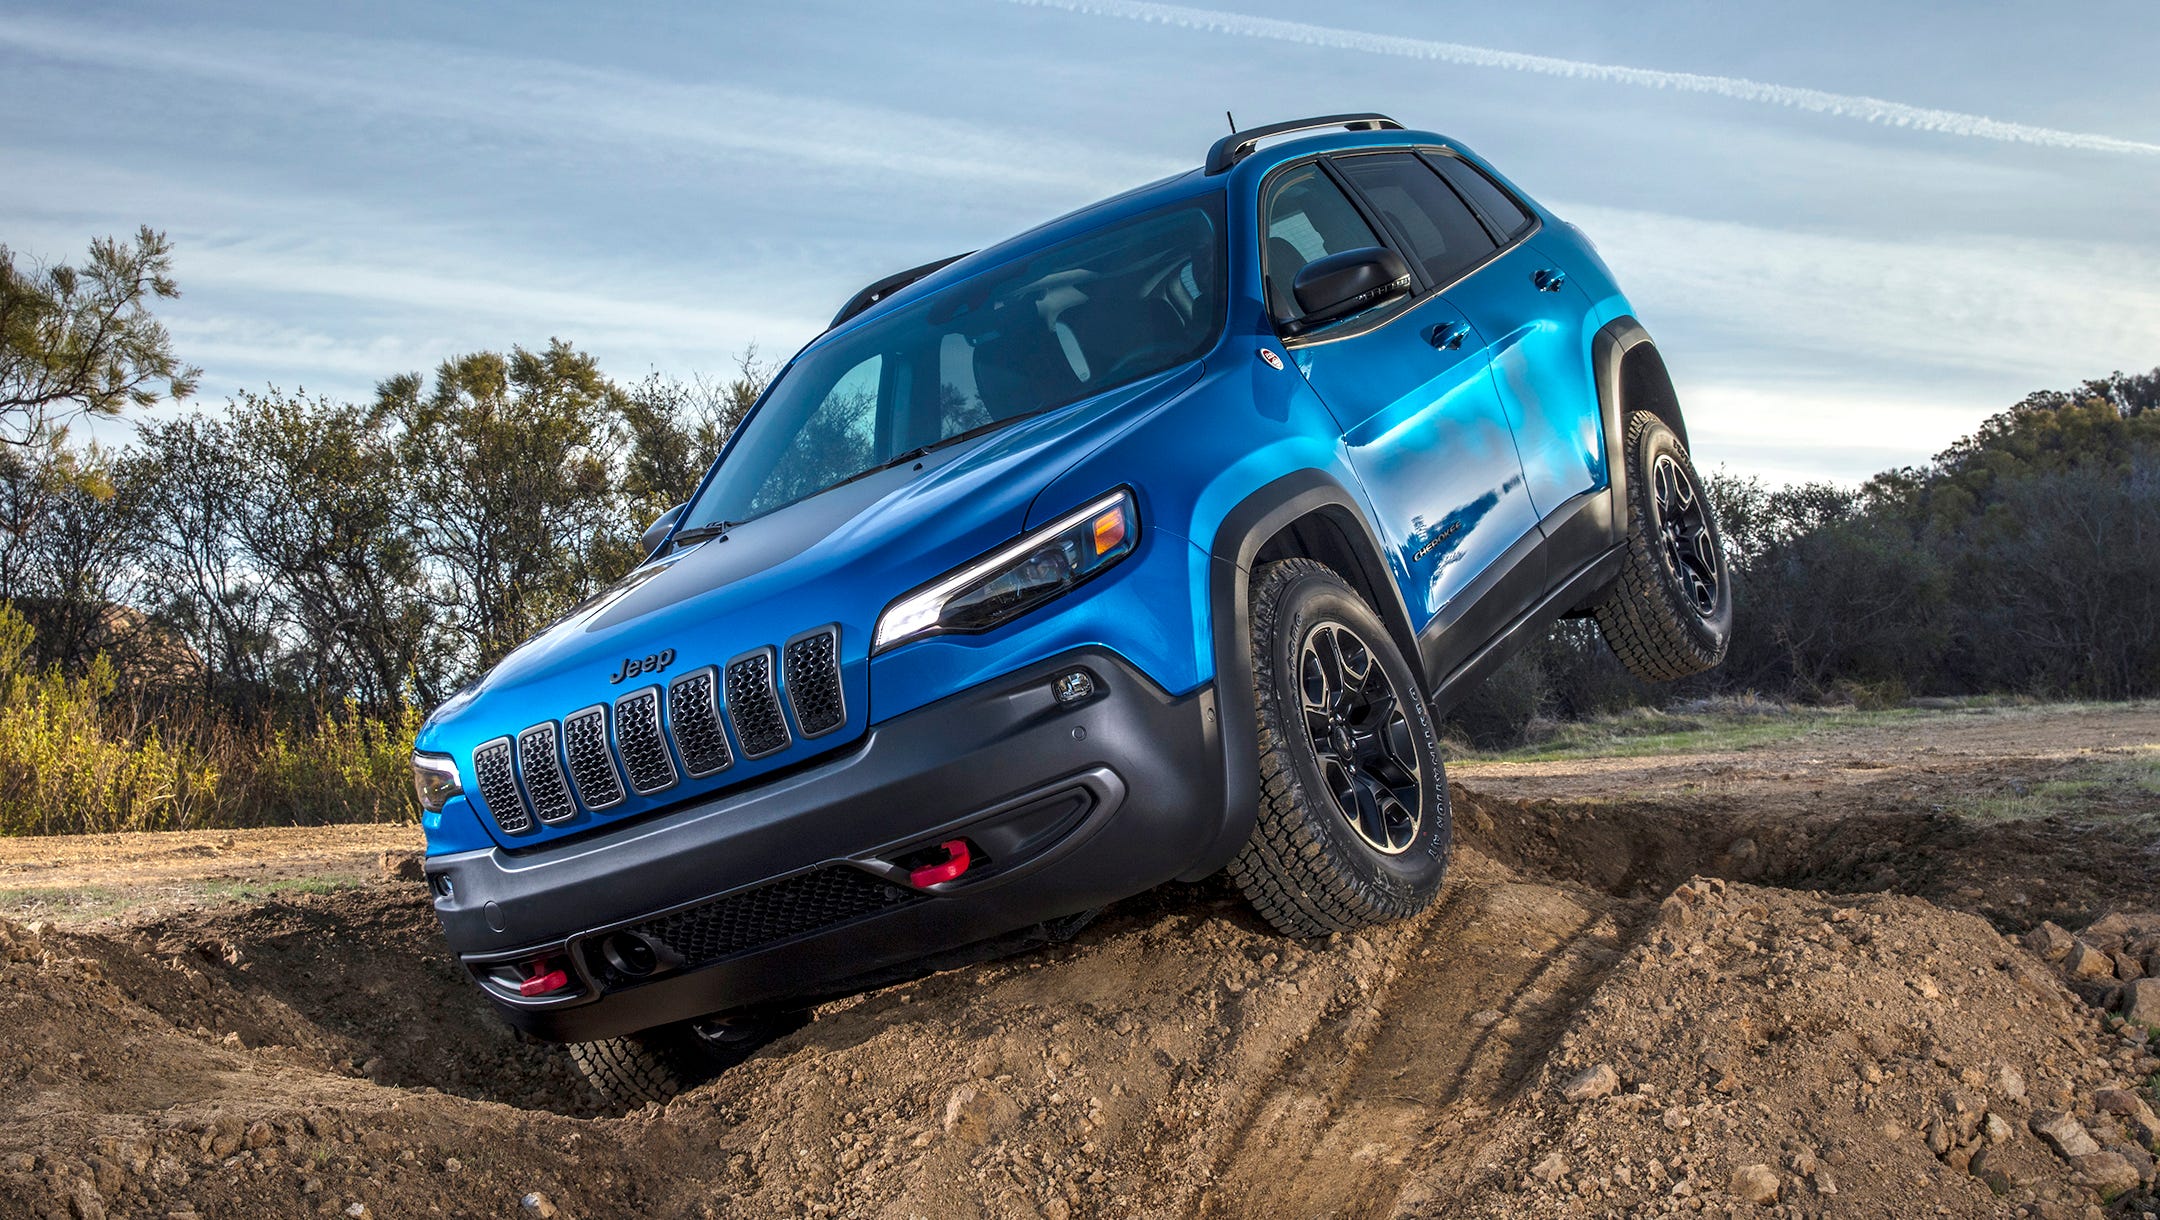 Chip Aanzetten veel plezier 2019 Jeep Cherokee powers ahead with new engine, looks